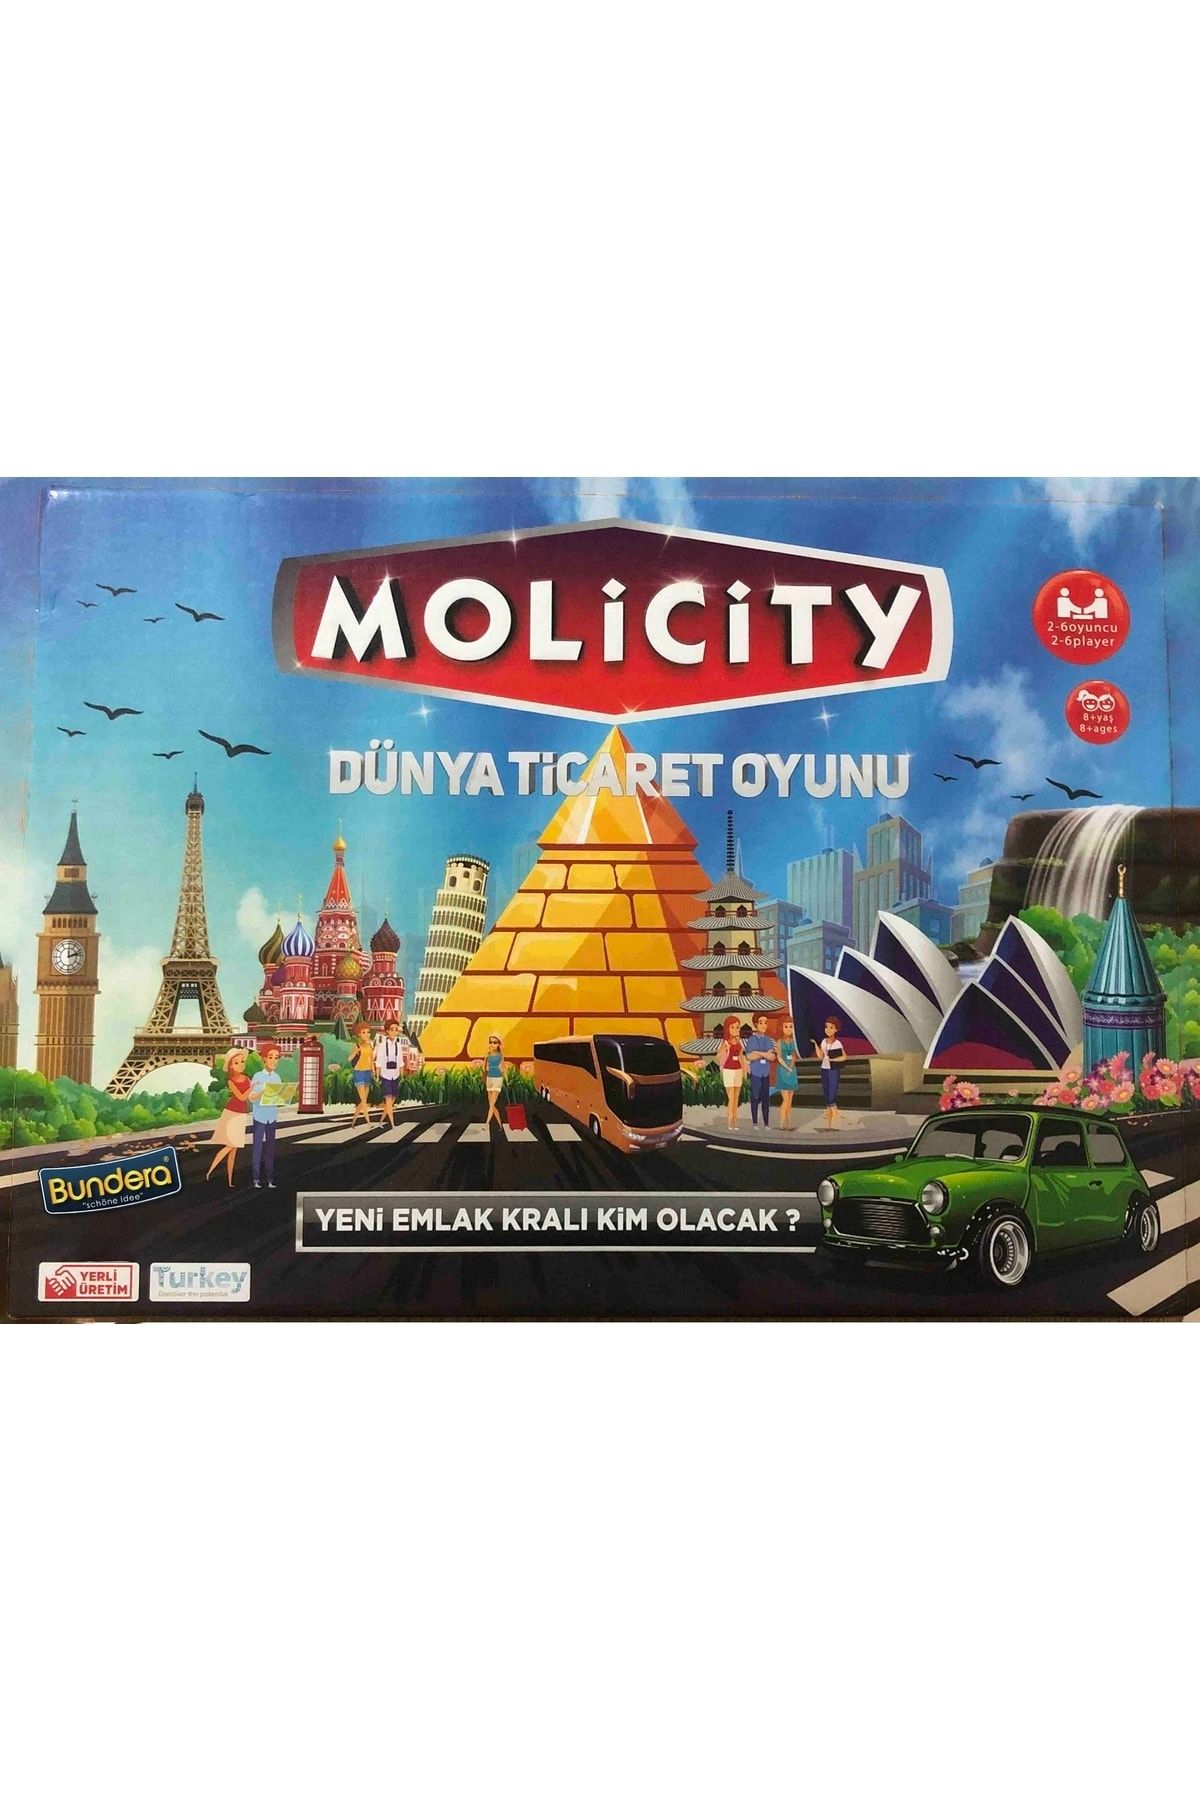 Bundera Emlak Ticaret Oyunu Molipoly Molicity Monopoly Monopoli Metropol Mega City Aile Oyunu Yeni Model